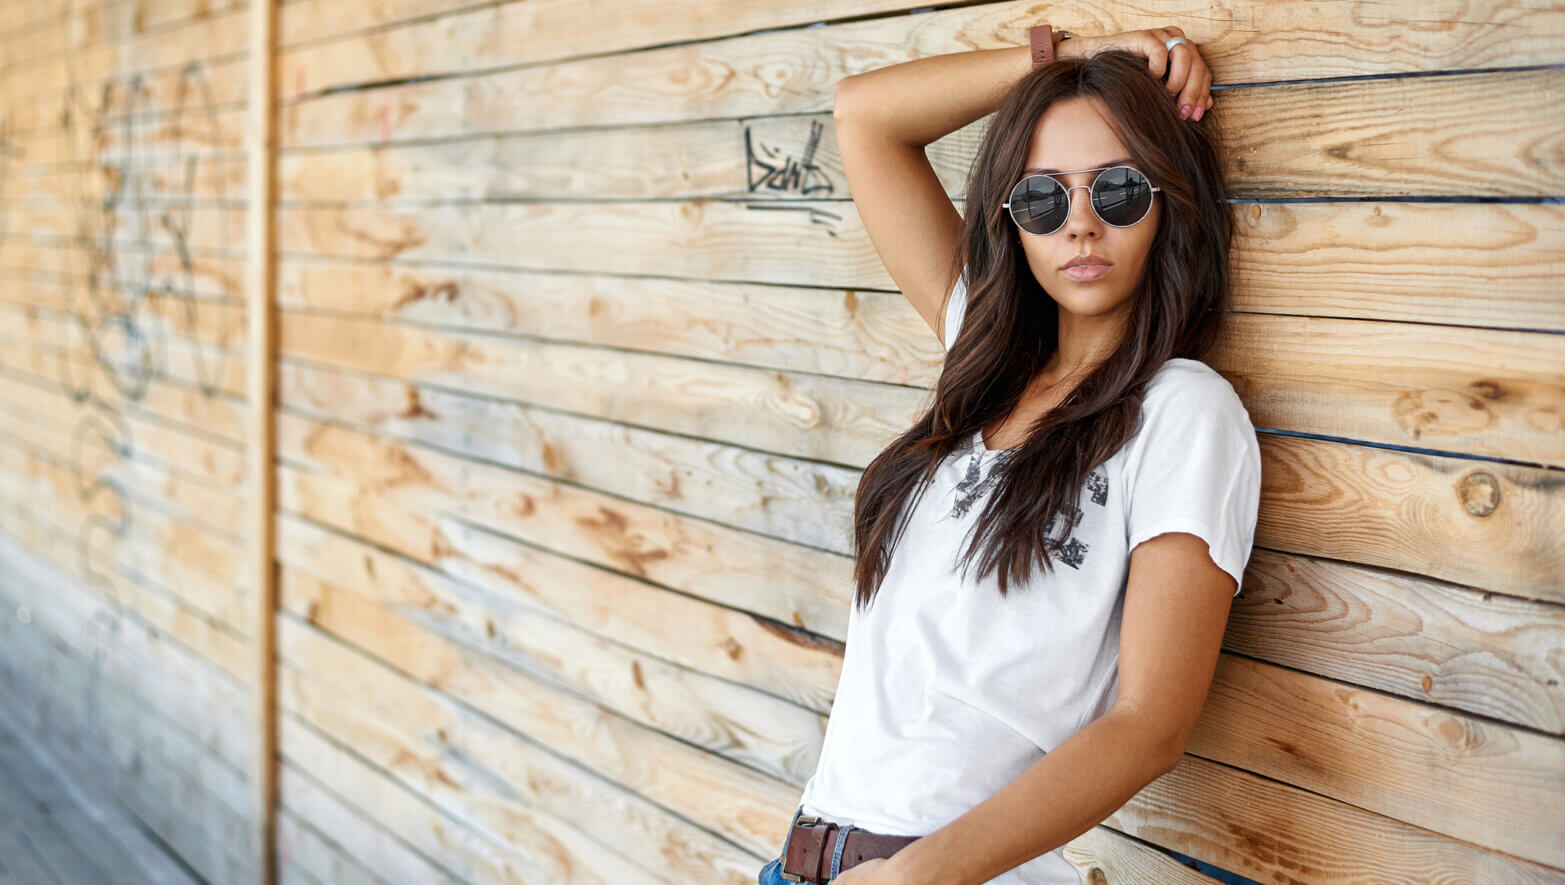 outdoor-street-fashion-portrait-stylish-woman-sunglasses